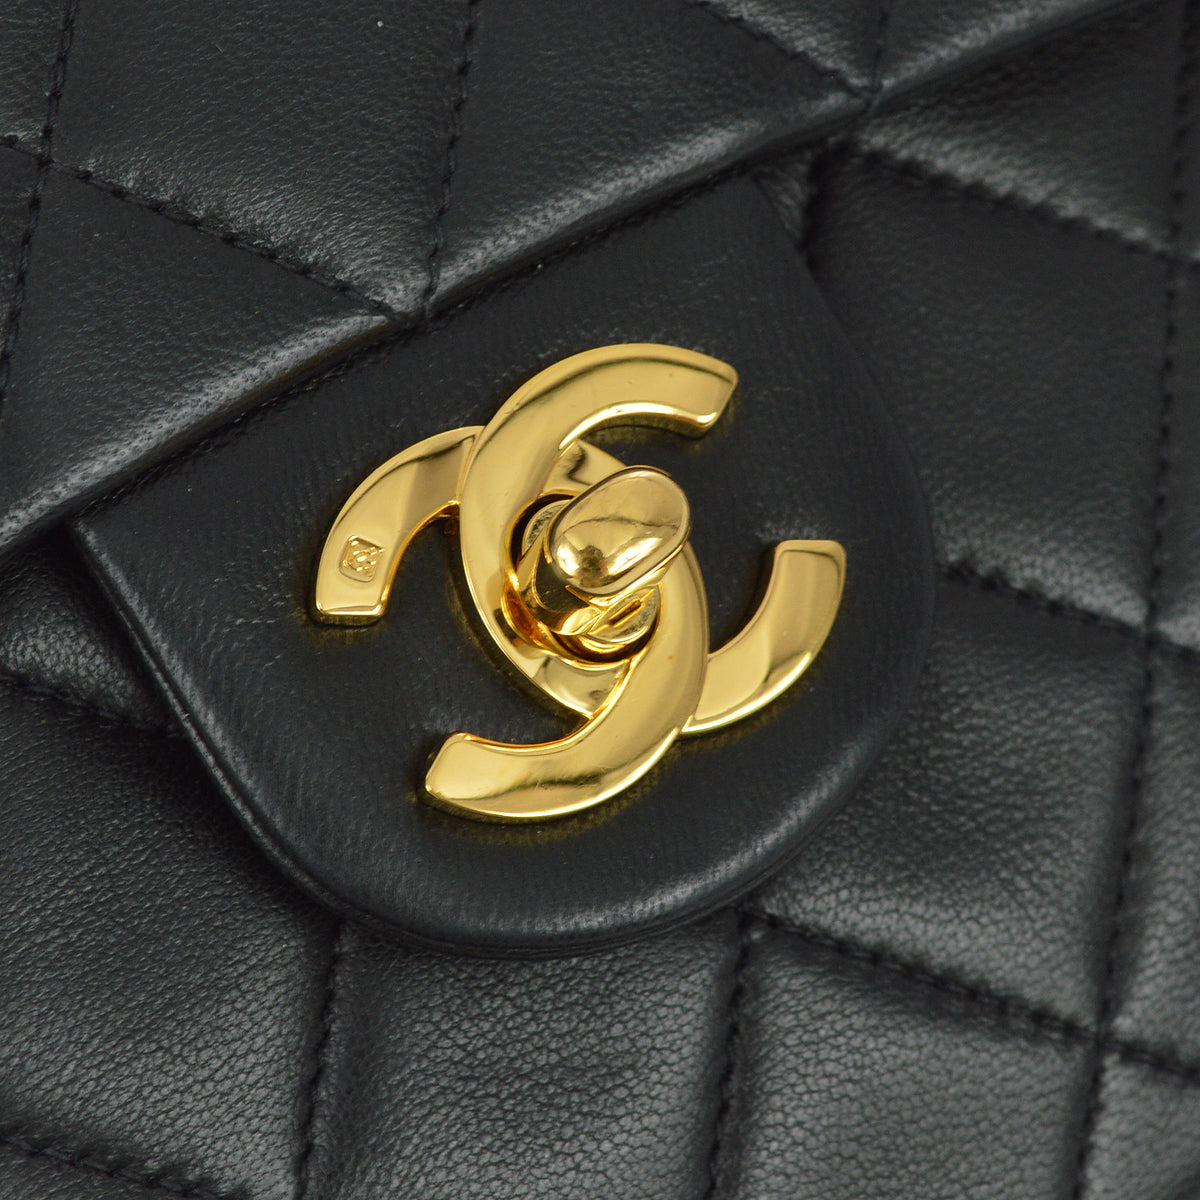 Chanel 1991-1994 黑色小羊皮迷你經典方形翻蓋包 17